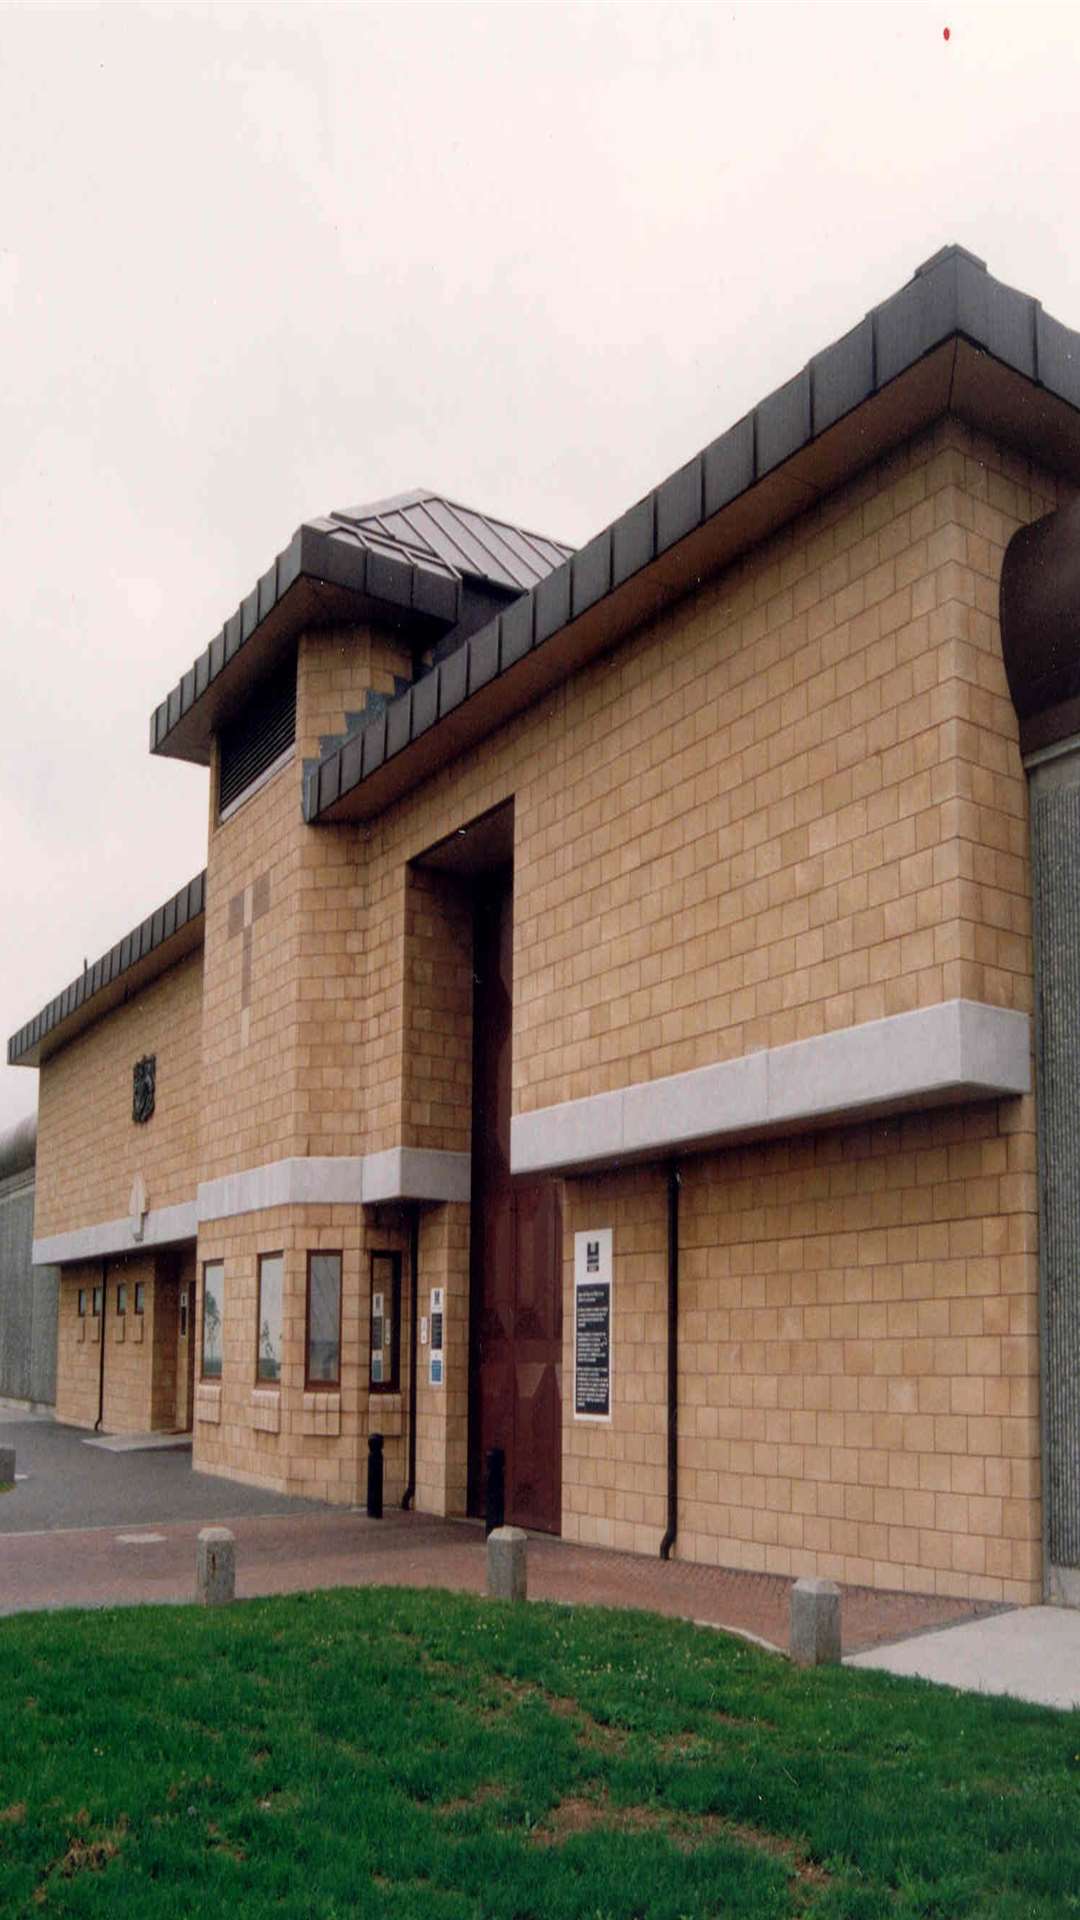 Swaleside Prison in Eastchurch